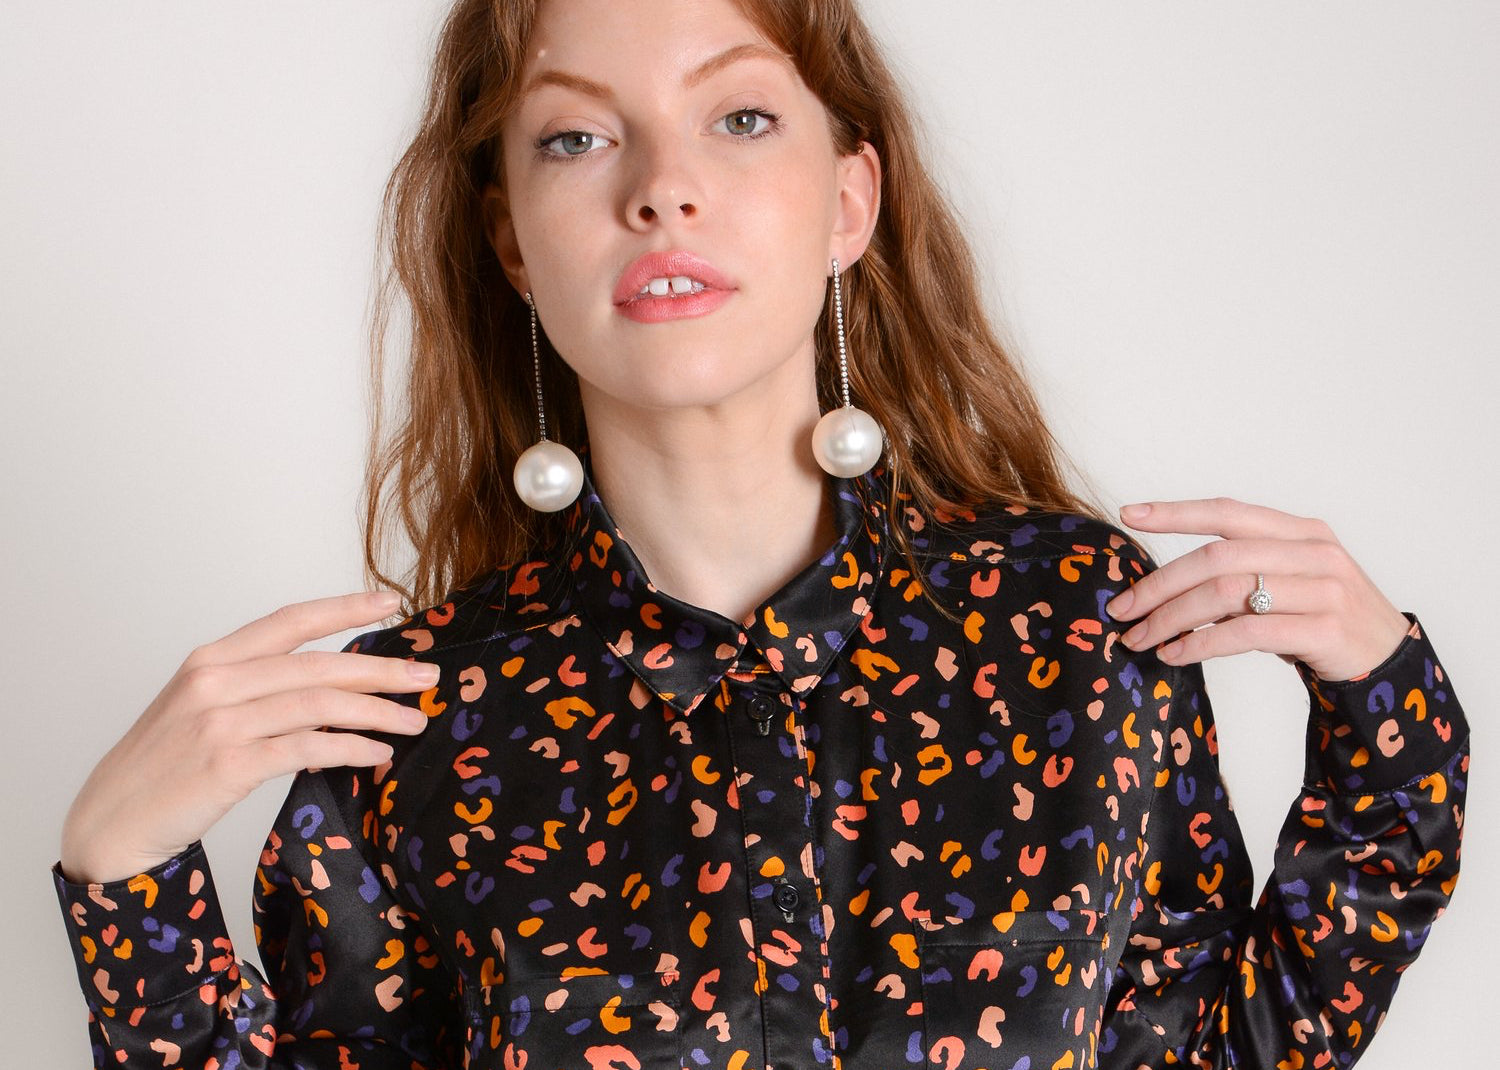 A woman models a patterned dress shirt